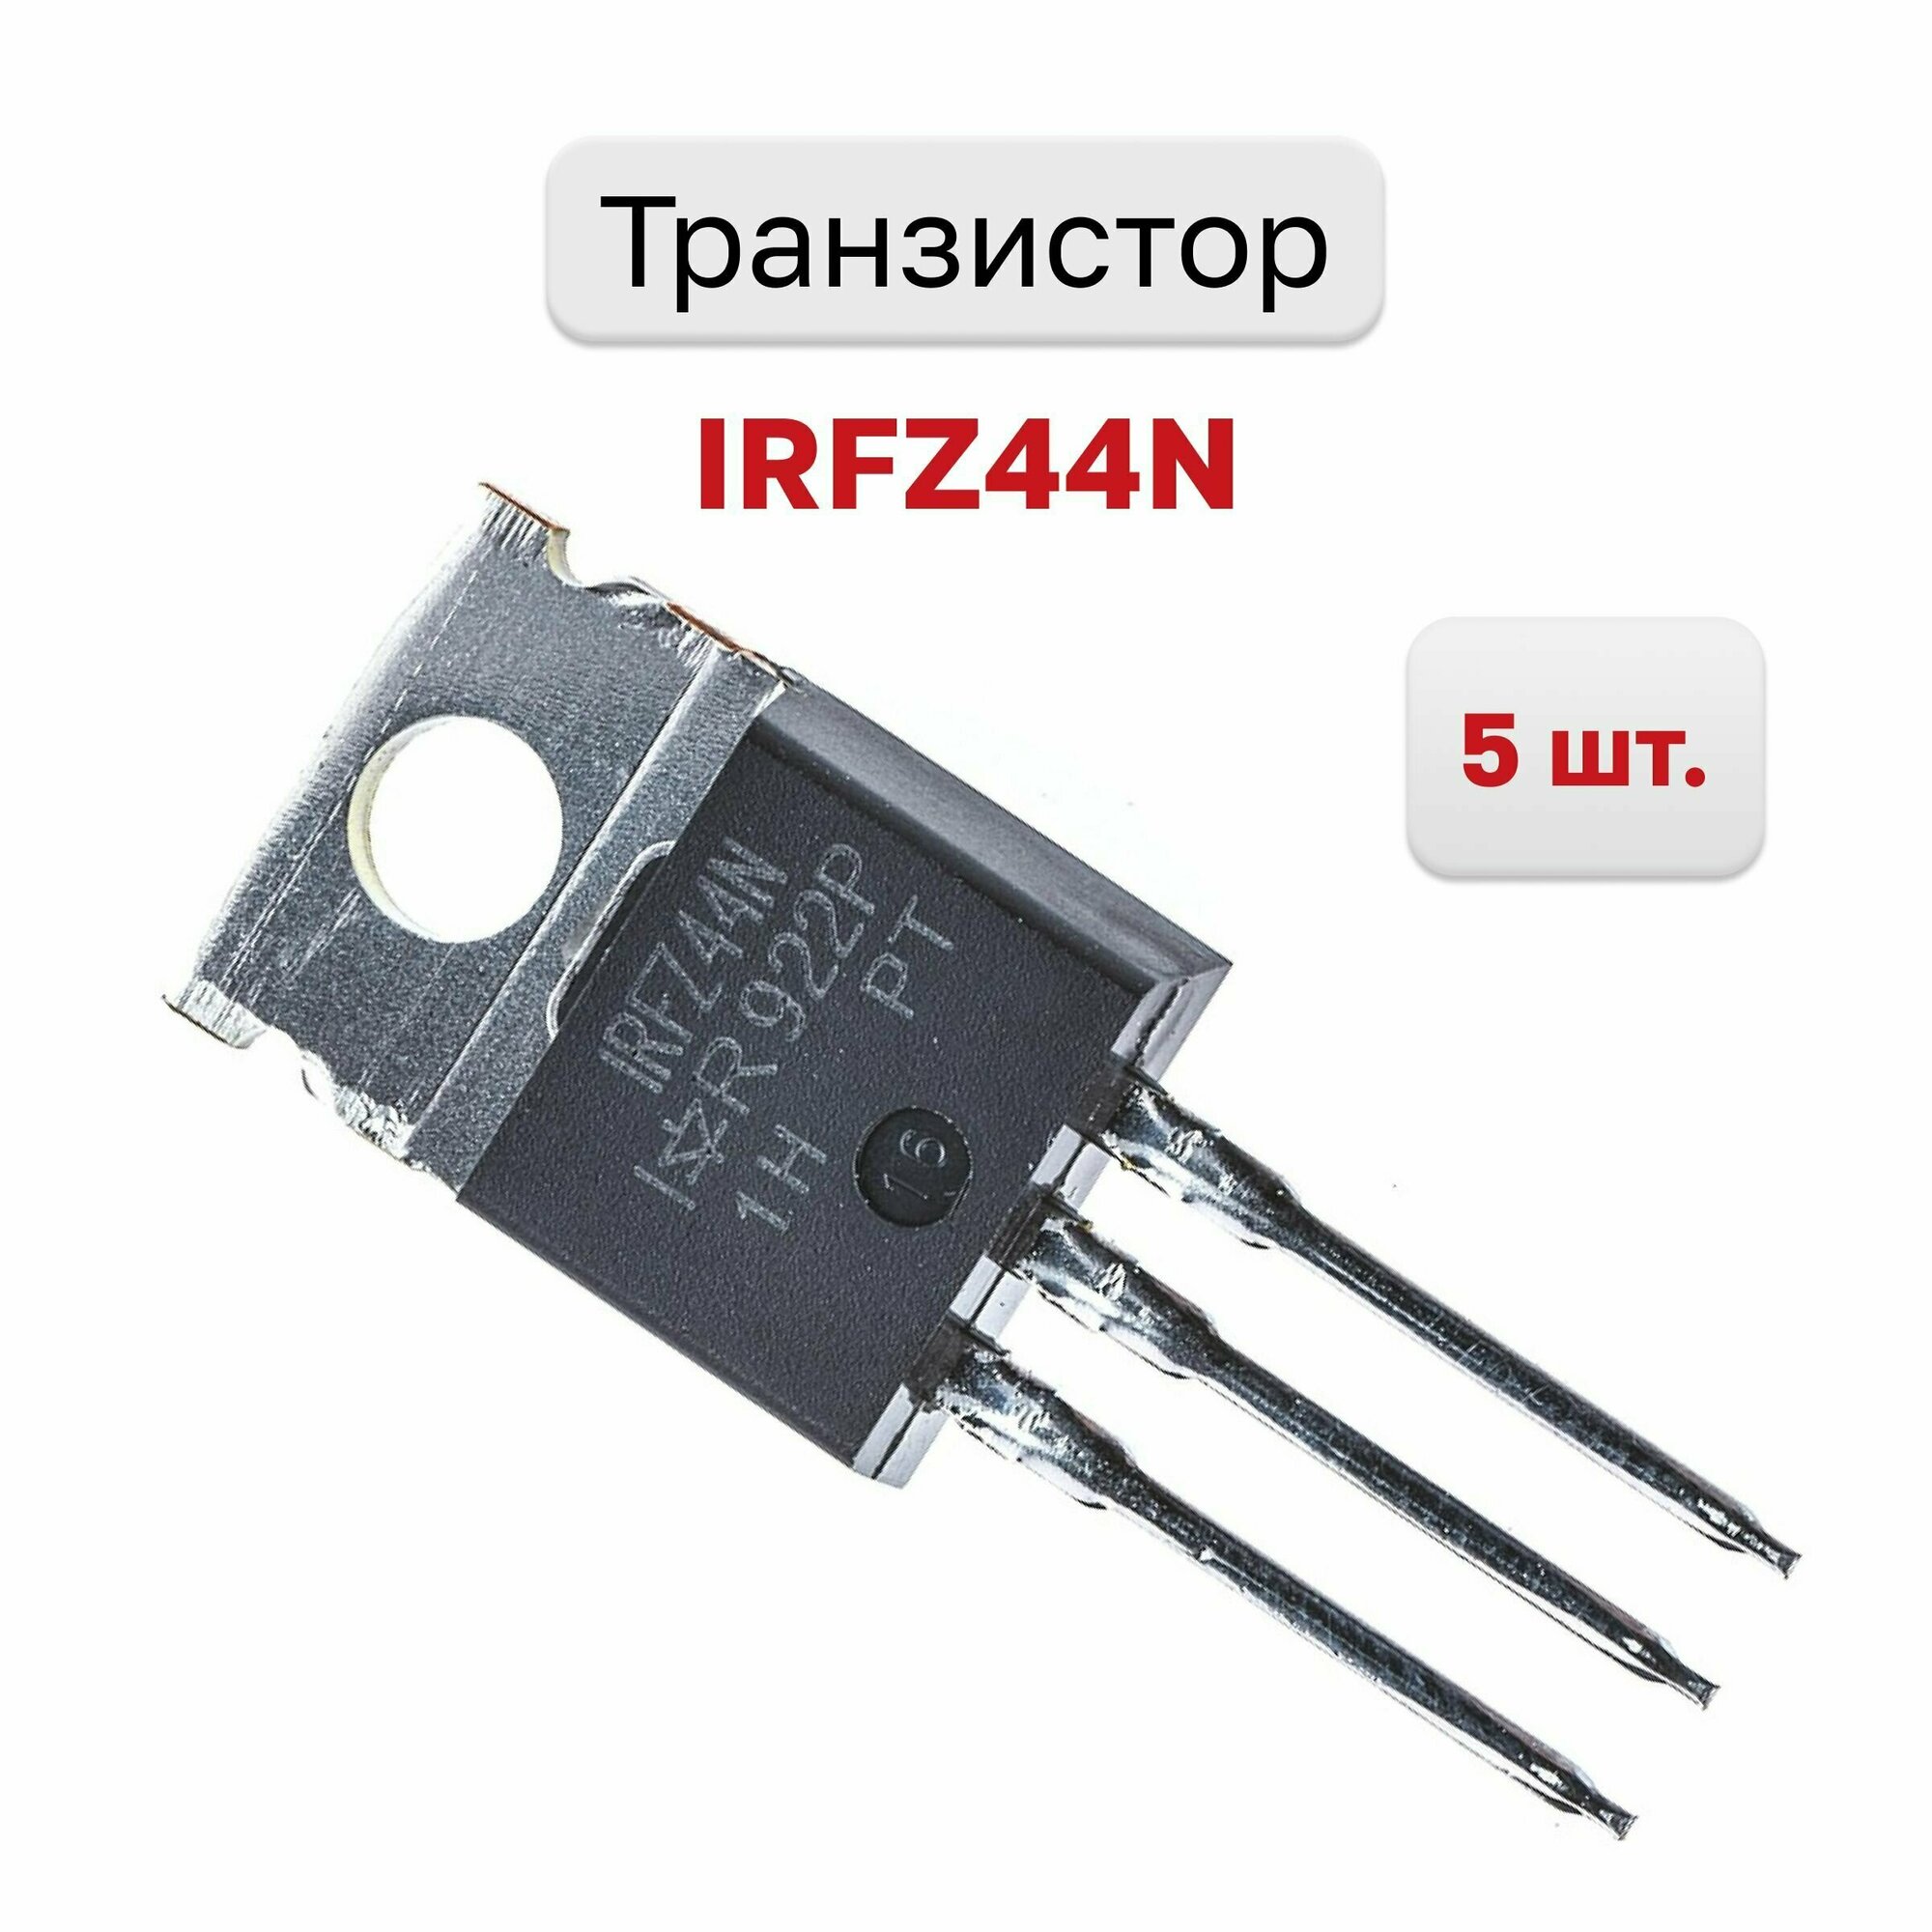 Транзистор IRFZ44N, 5 шт.